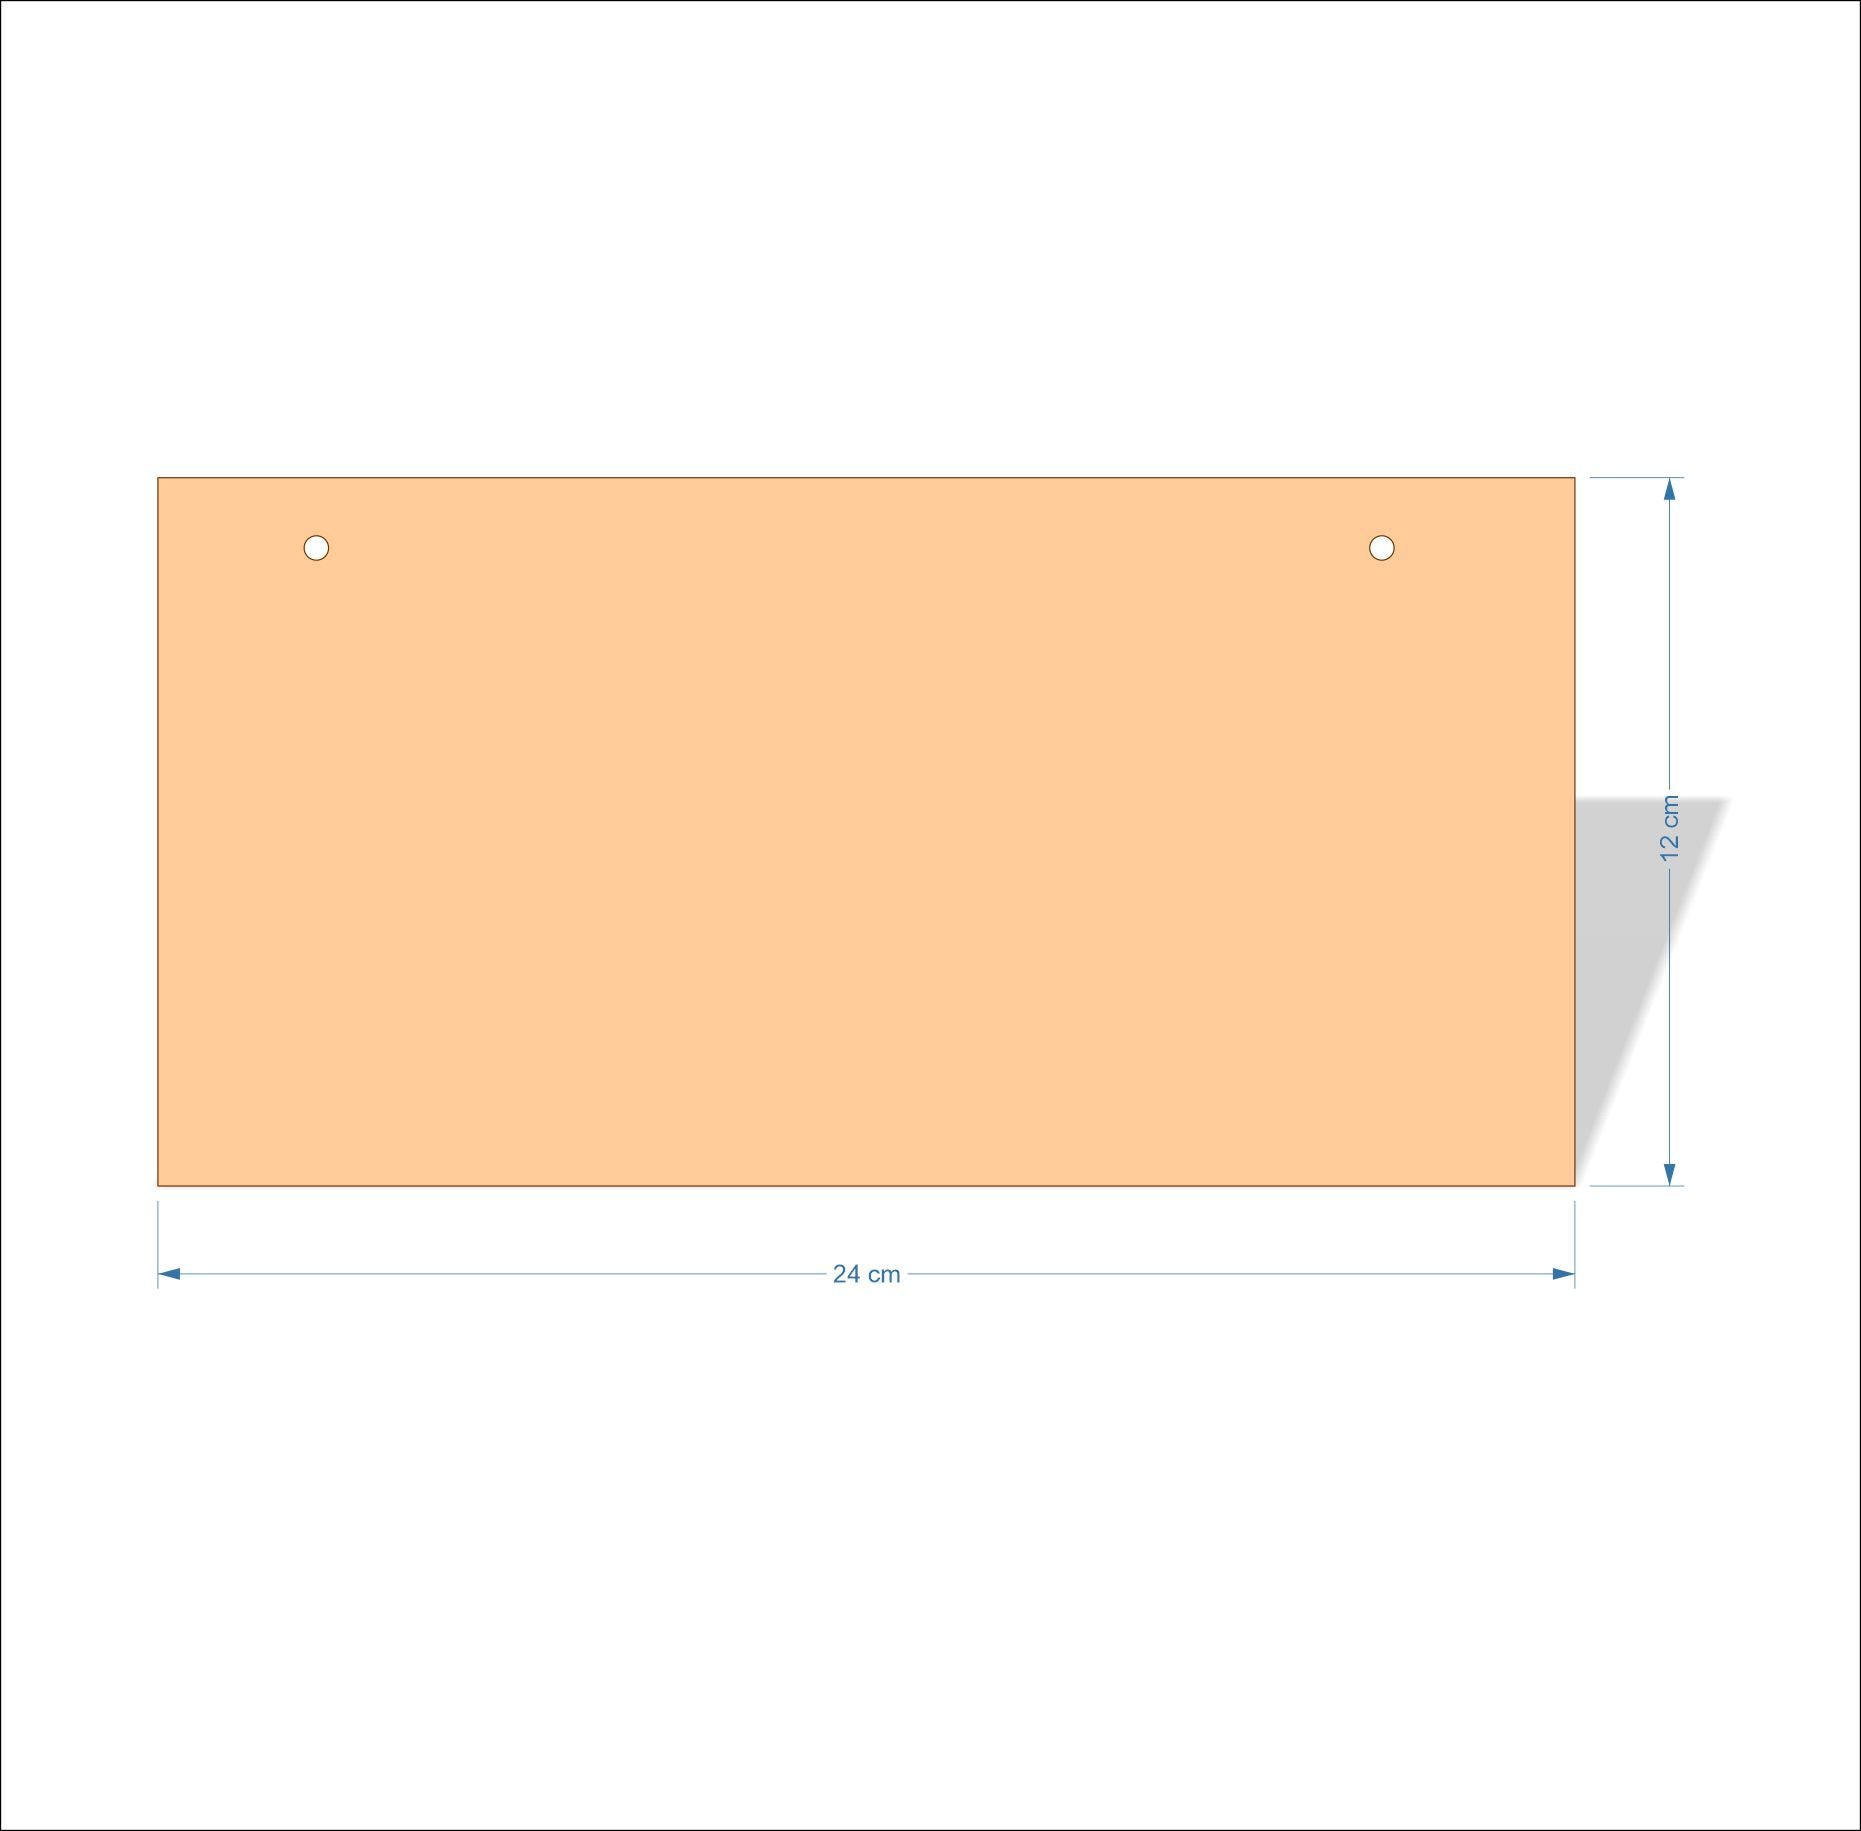 24 cm X 12 cm 3mm MDF Plaques with square corners